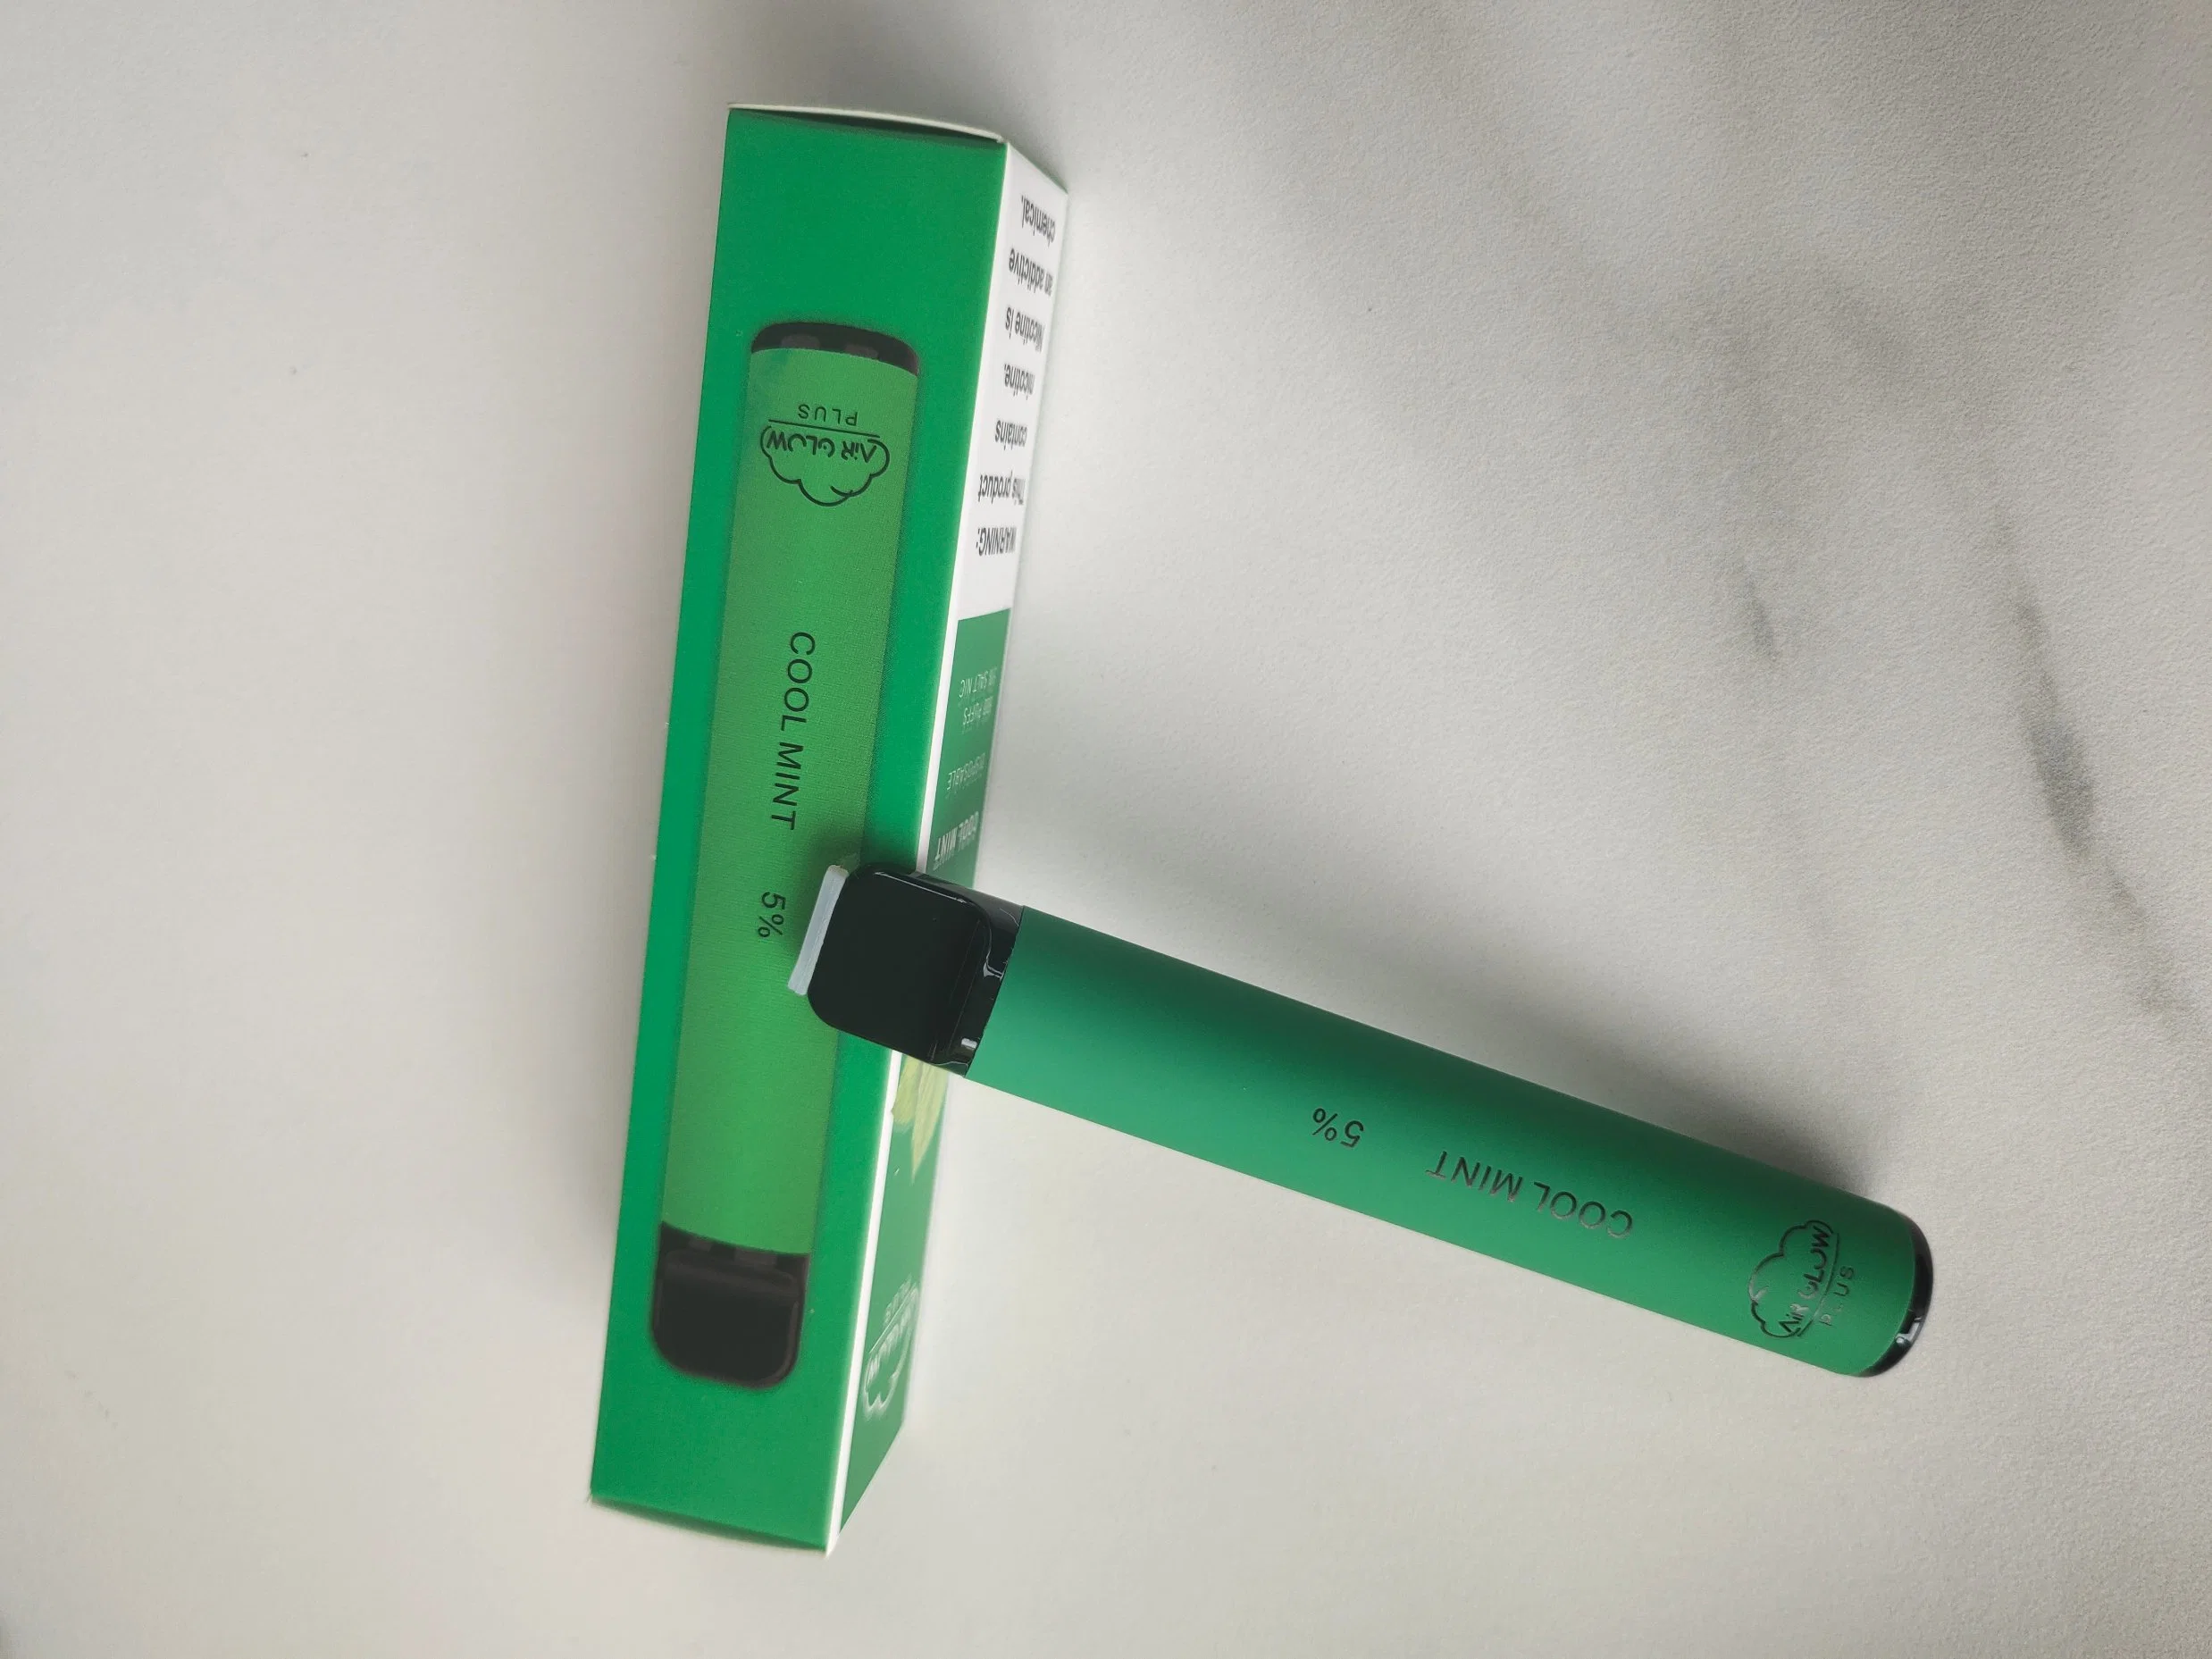 Customized Logo Oil Vape Pen Air Glow Plus Disposable/Chargeable Vape Pen with Flat Drip Tip